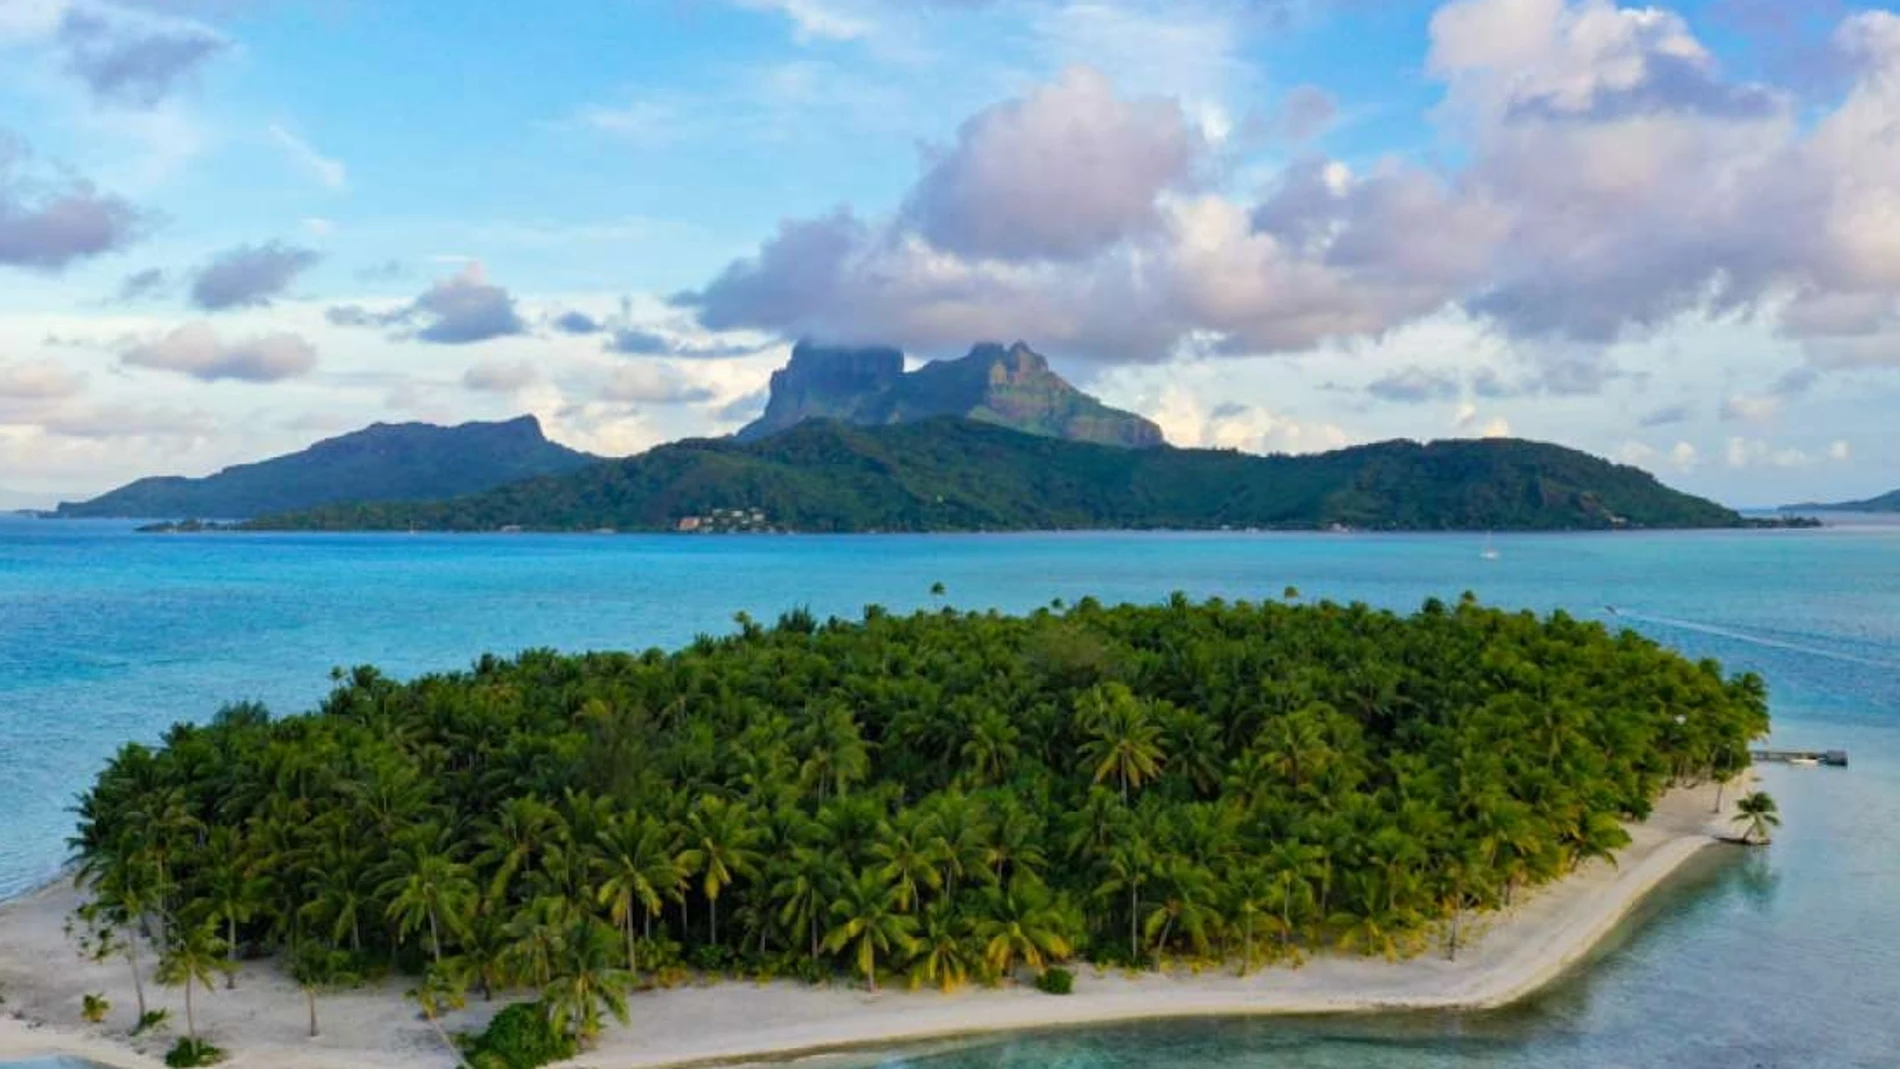 La isla de Motu Tane tiene unas vistas inmejorables.